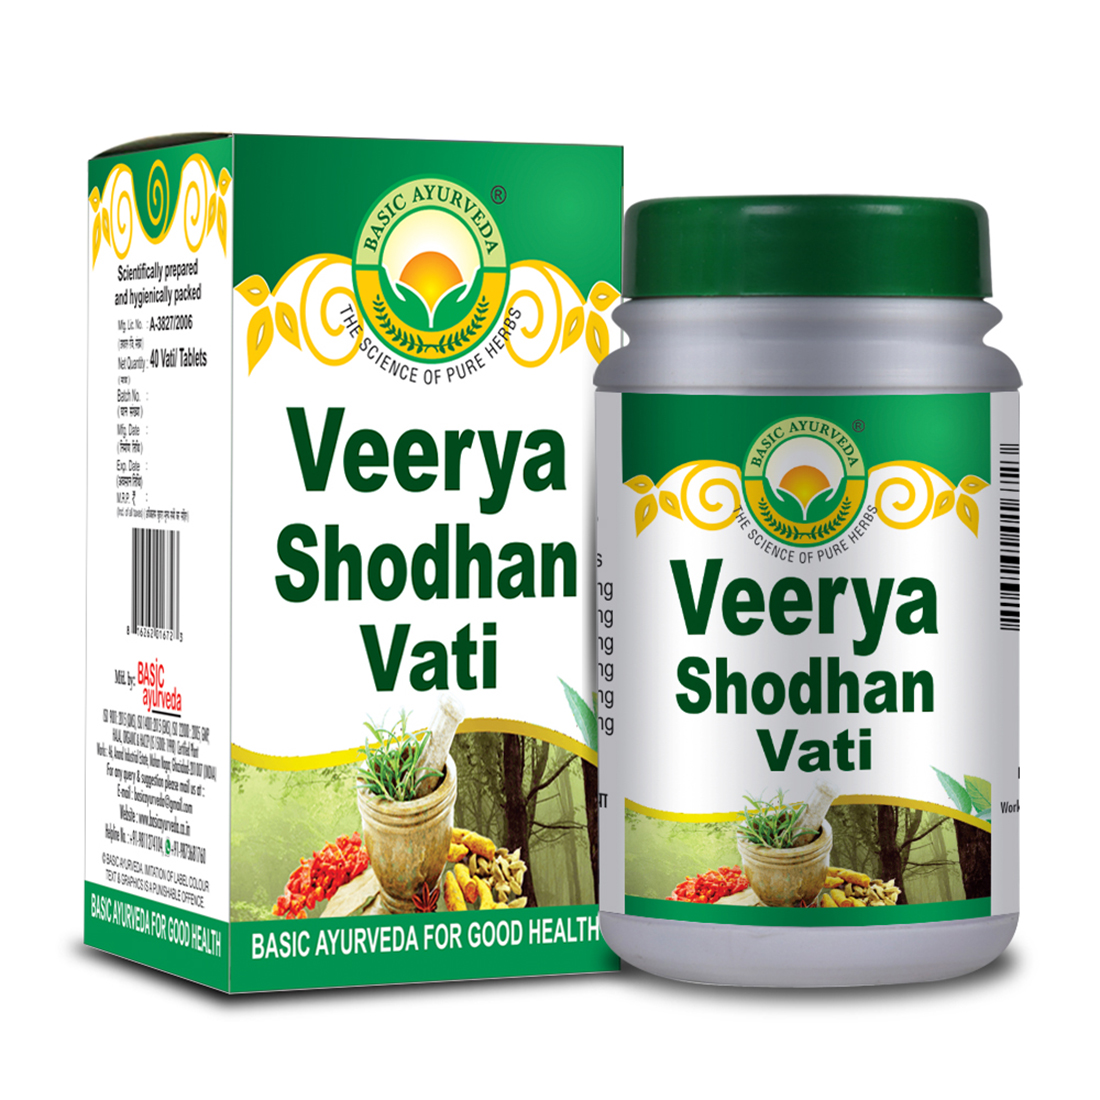 Veerya Shodhan Vati